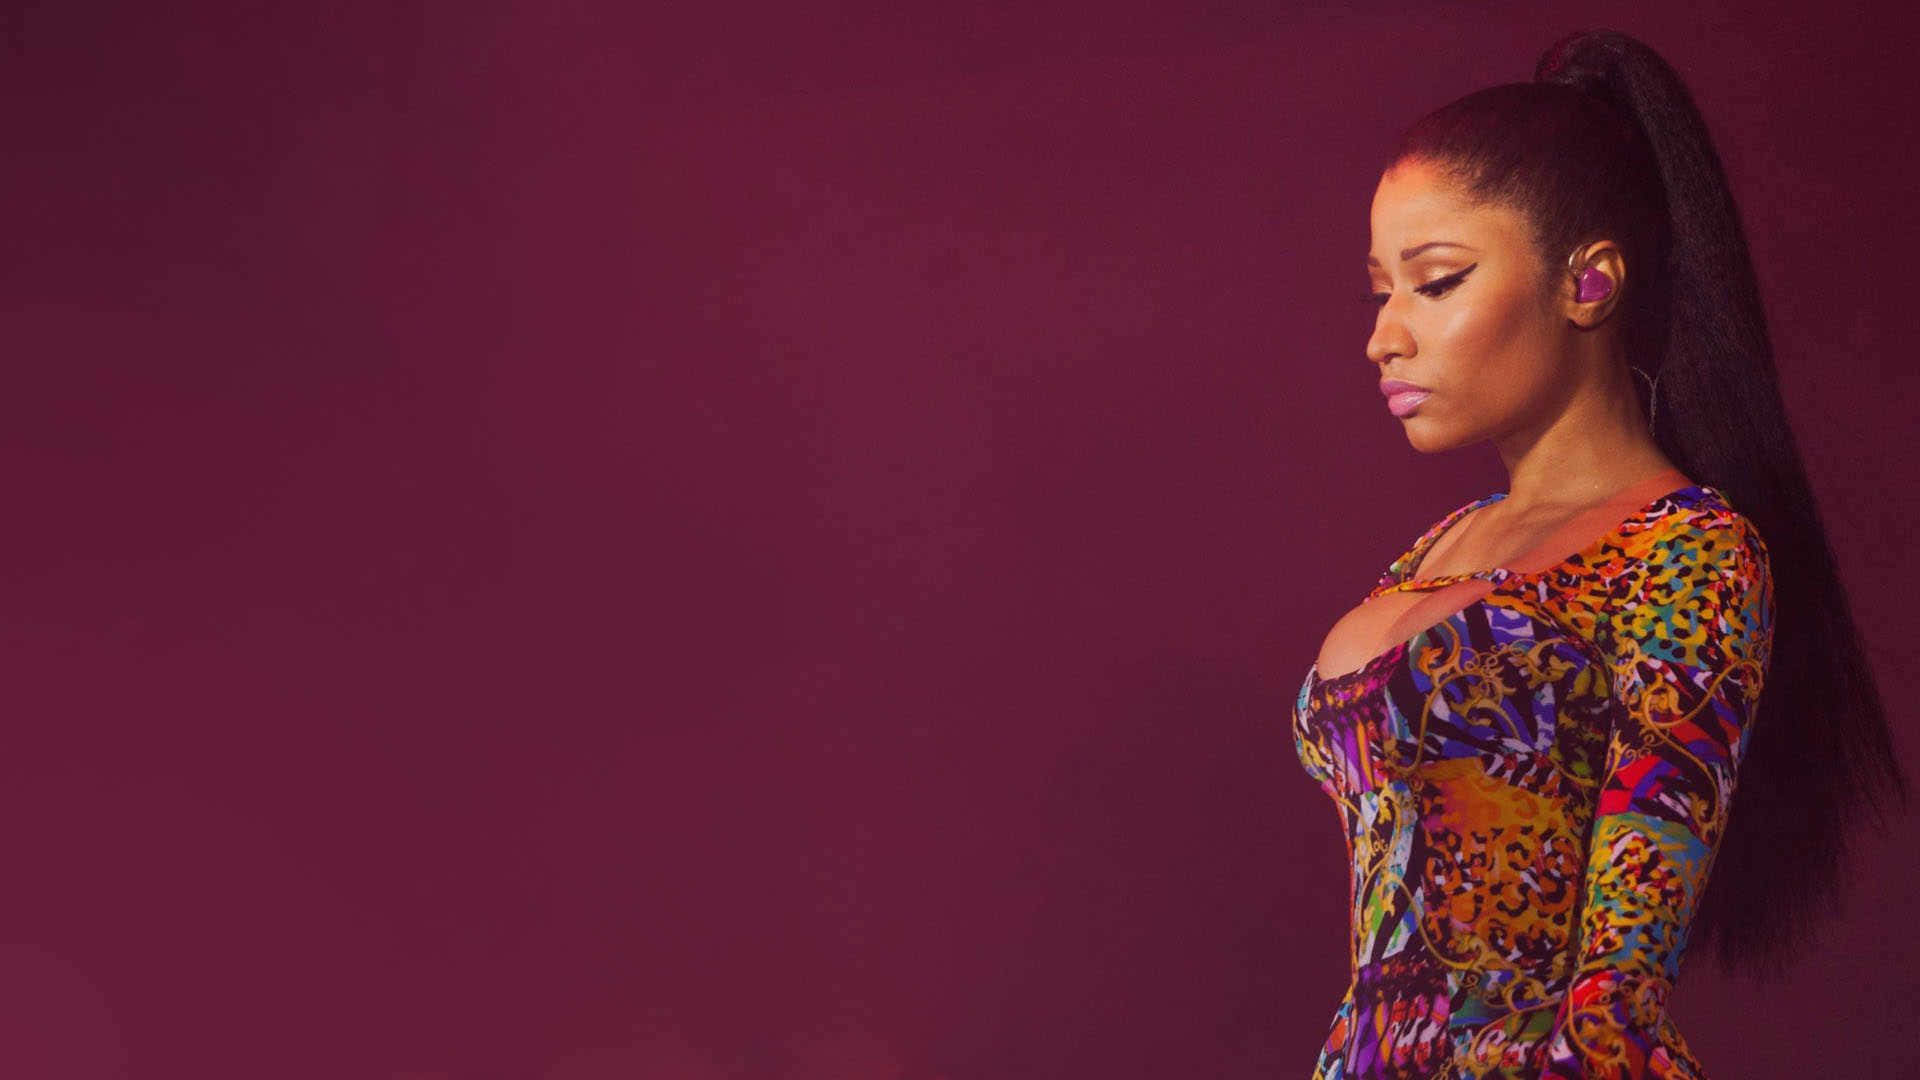 Nicki Minaj strikes a bold pose in a vibrant outfit